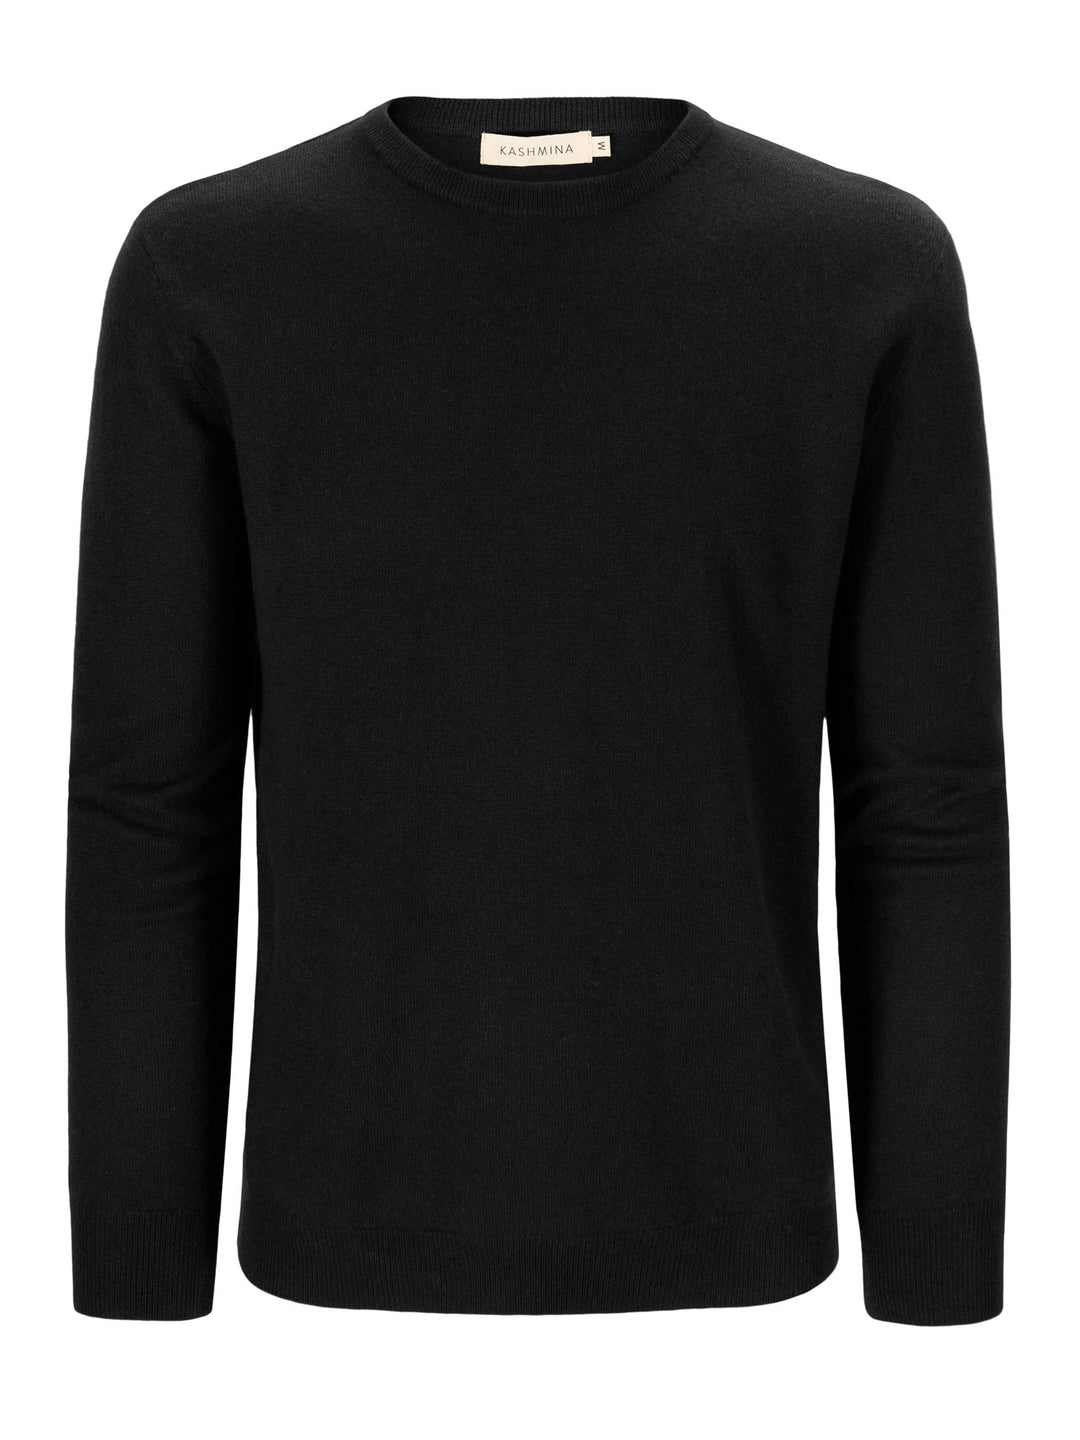 Black round neck cashmere sweater in 100% cashmere. Scandinavian design by Kashmina.